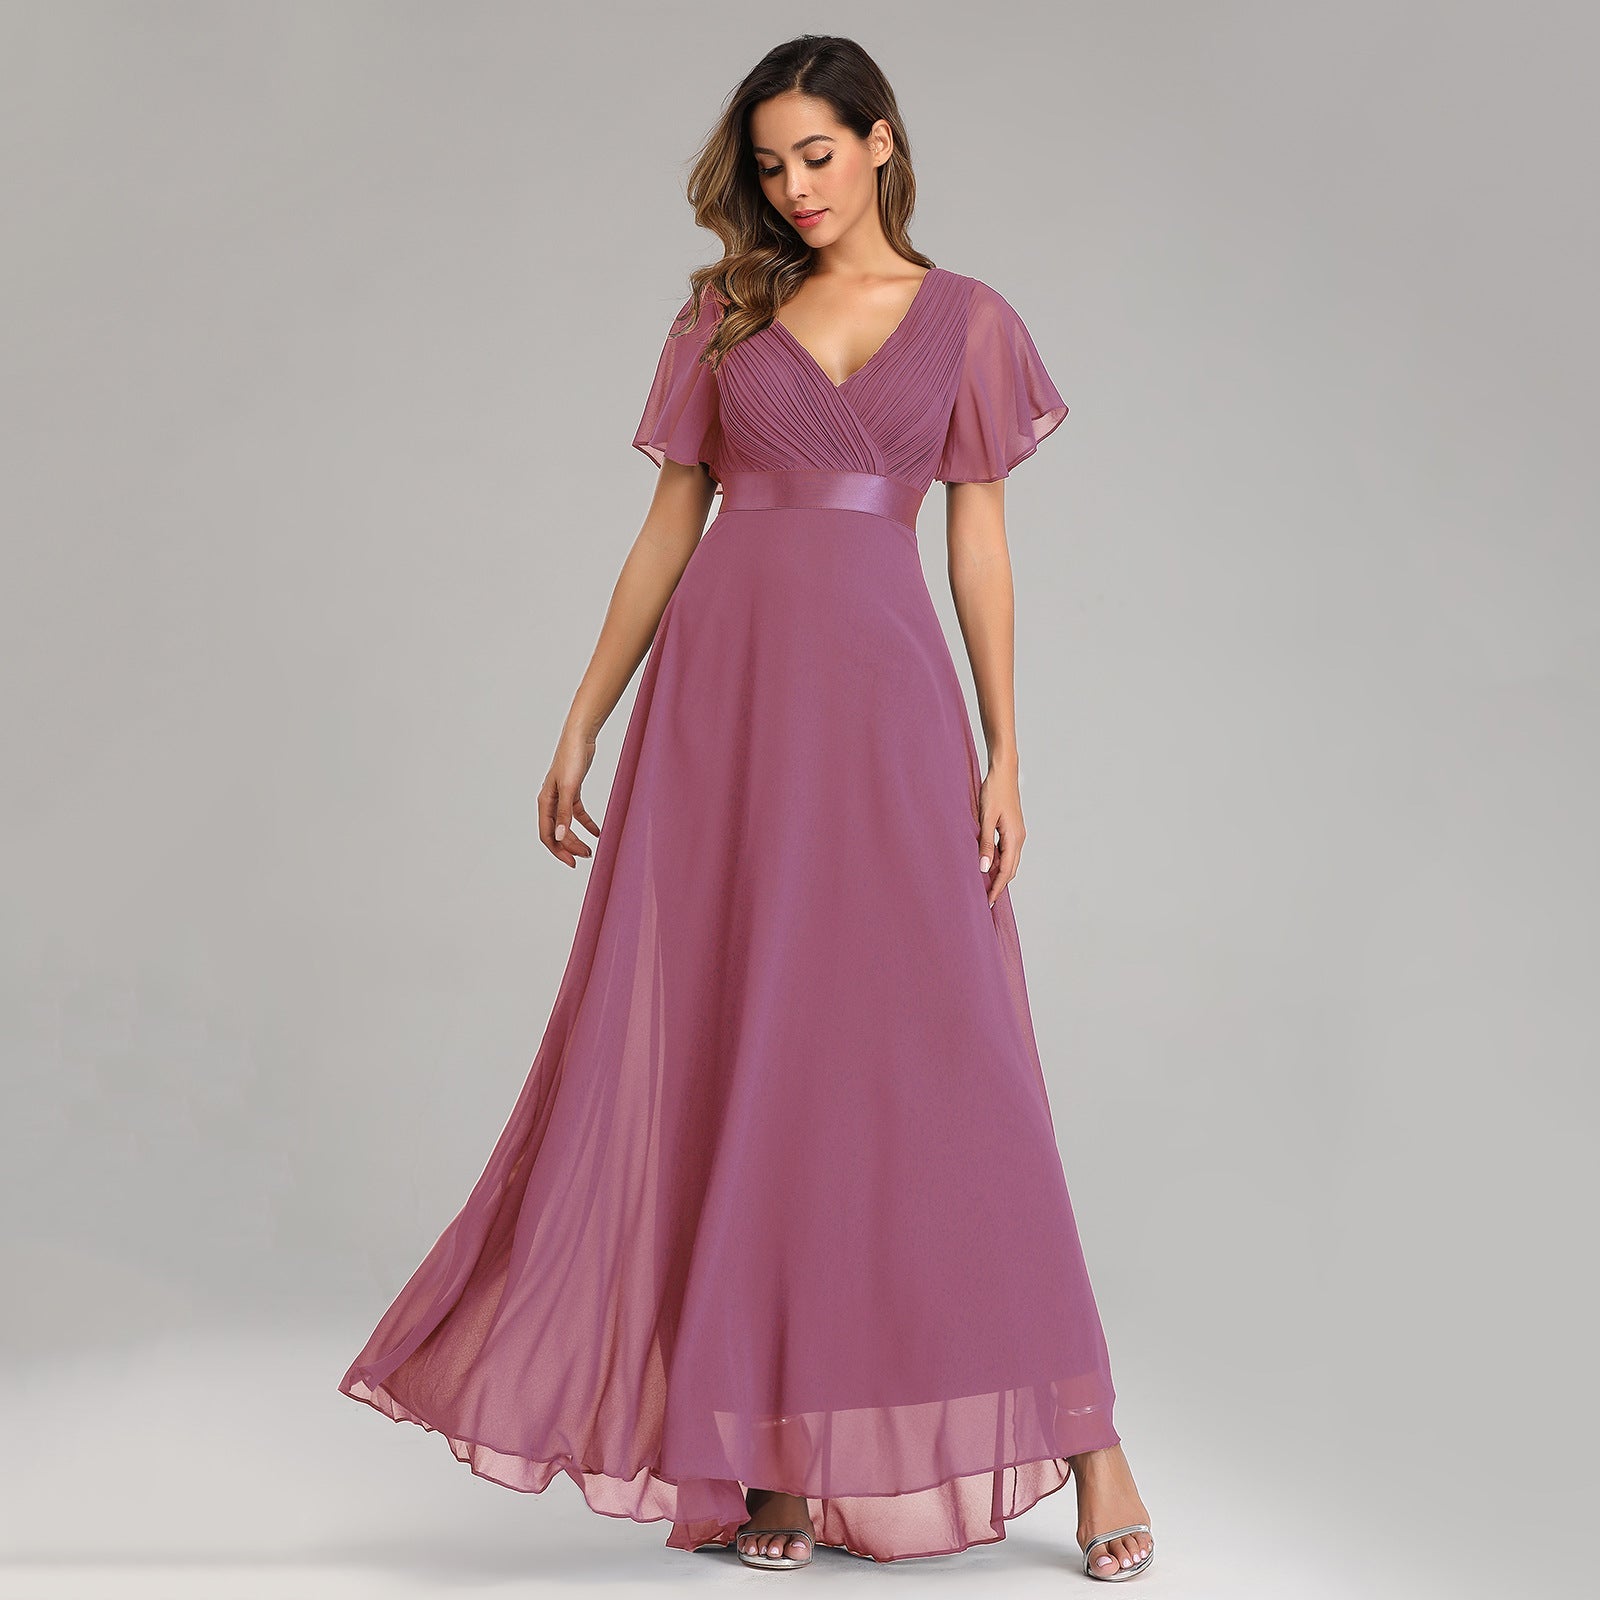 Elegant Chiffon Plus Sizes Bridesmaid Dresses-Dresses-Lotus Pink-S-Free Shipping at meselling99